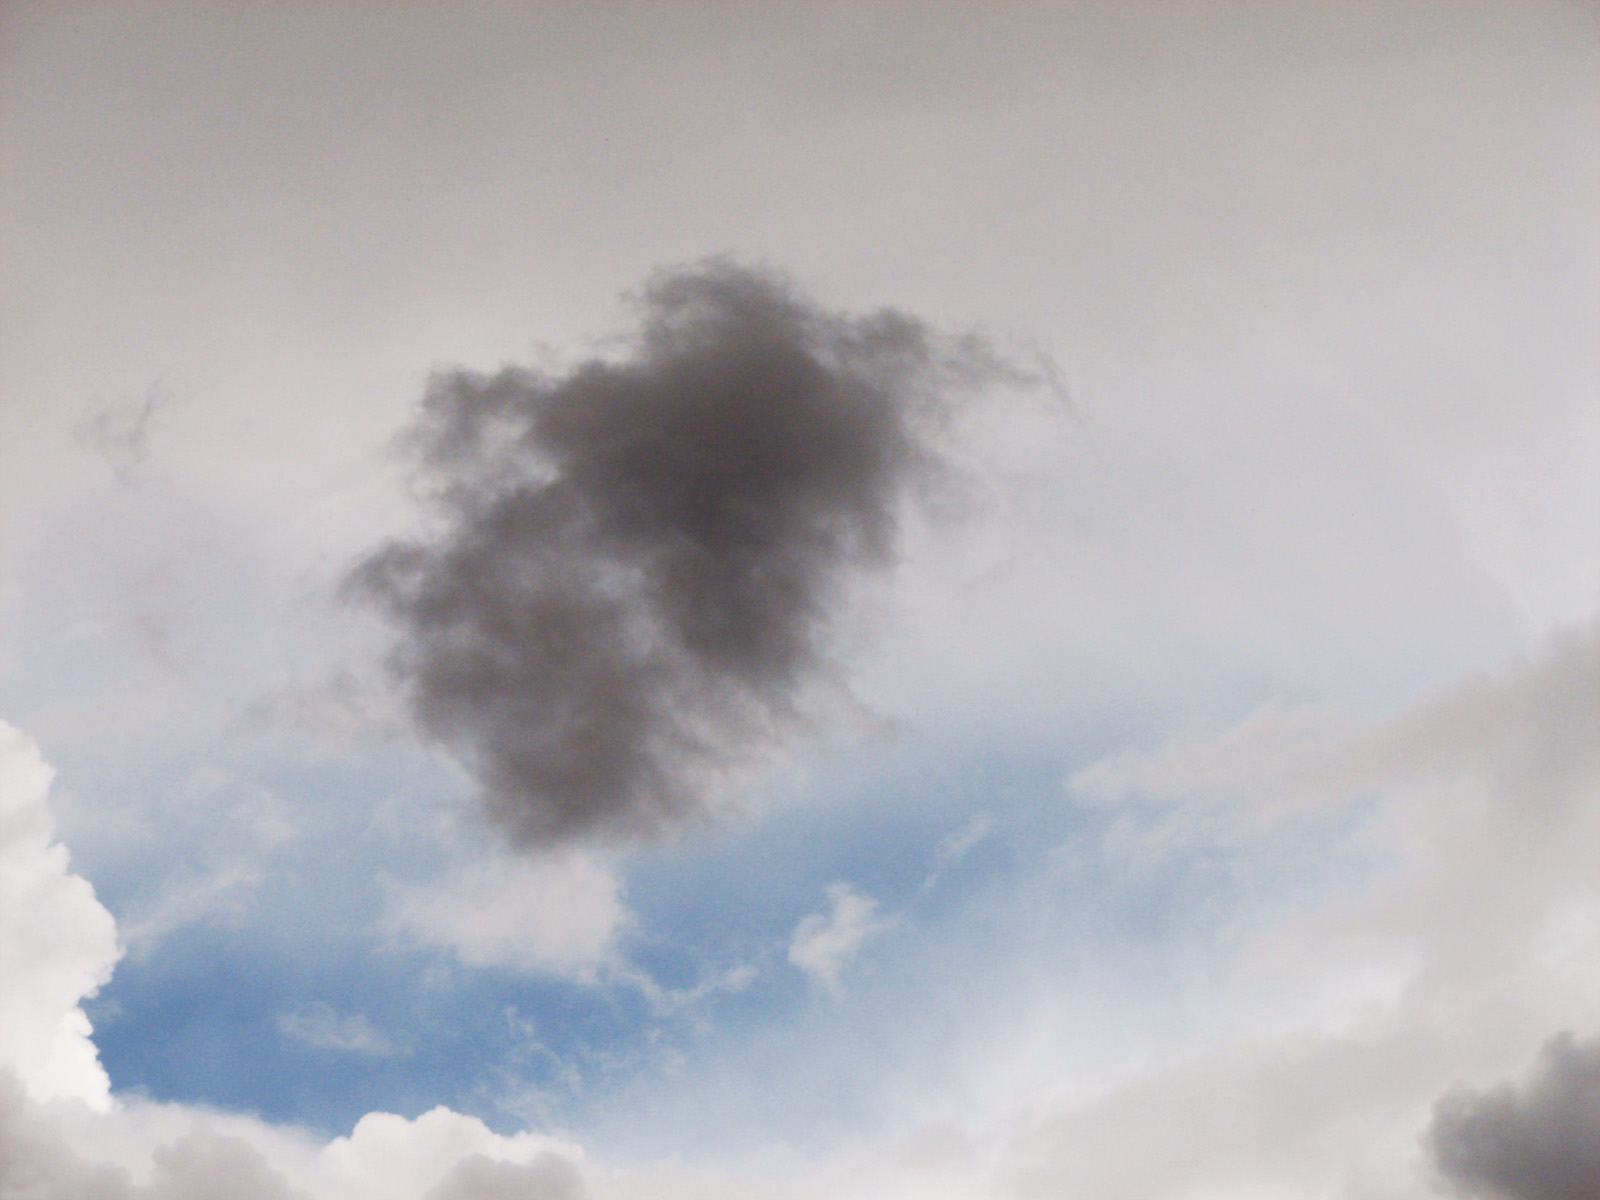 Black cloud by Mish-A-Man